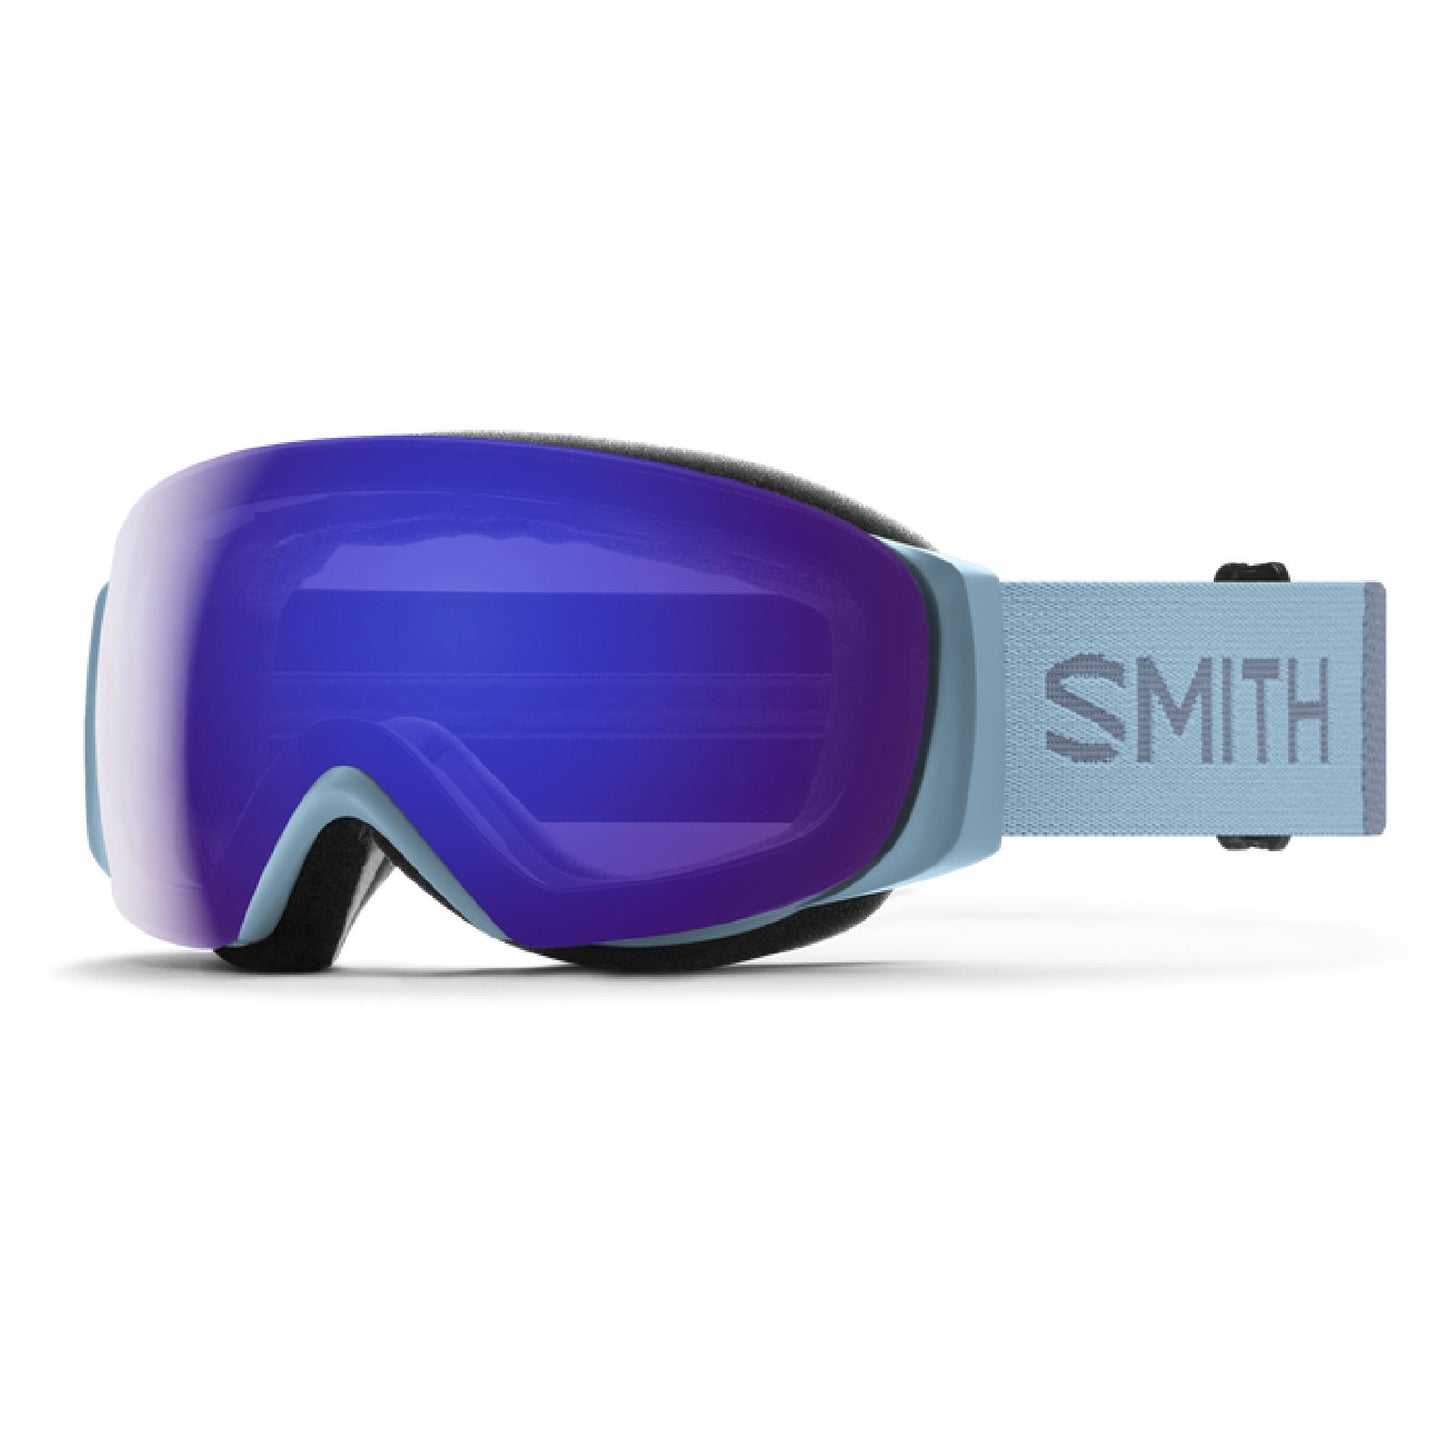 Smith I/O MAG S Low Bridge Fit Snow Goggle Glacier ChromaPop Everyday Violet Mirror - Smith Snow Goggles